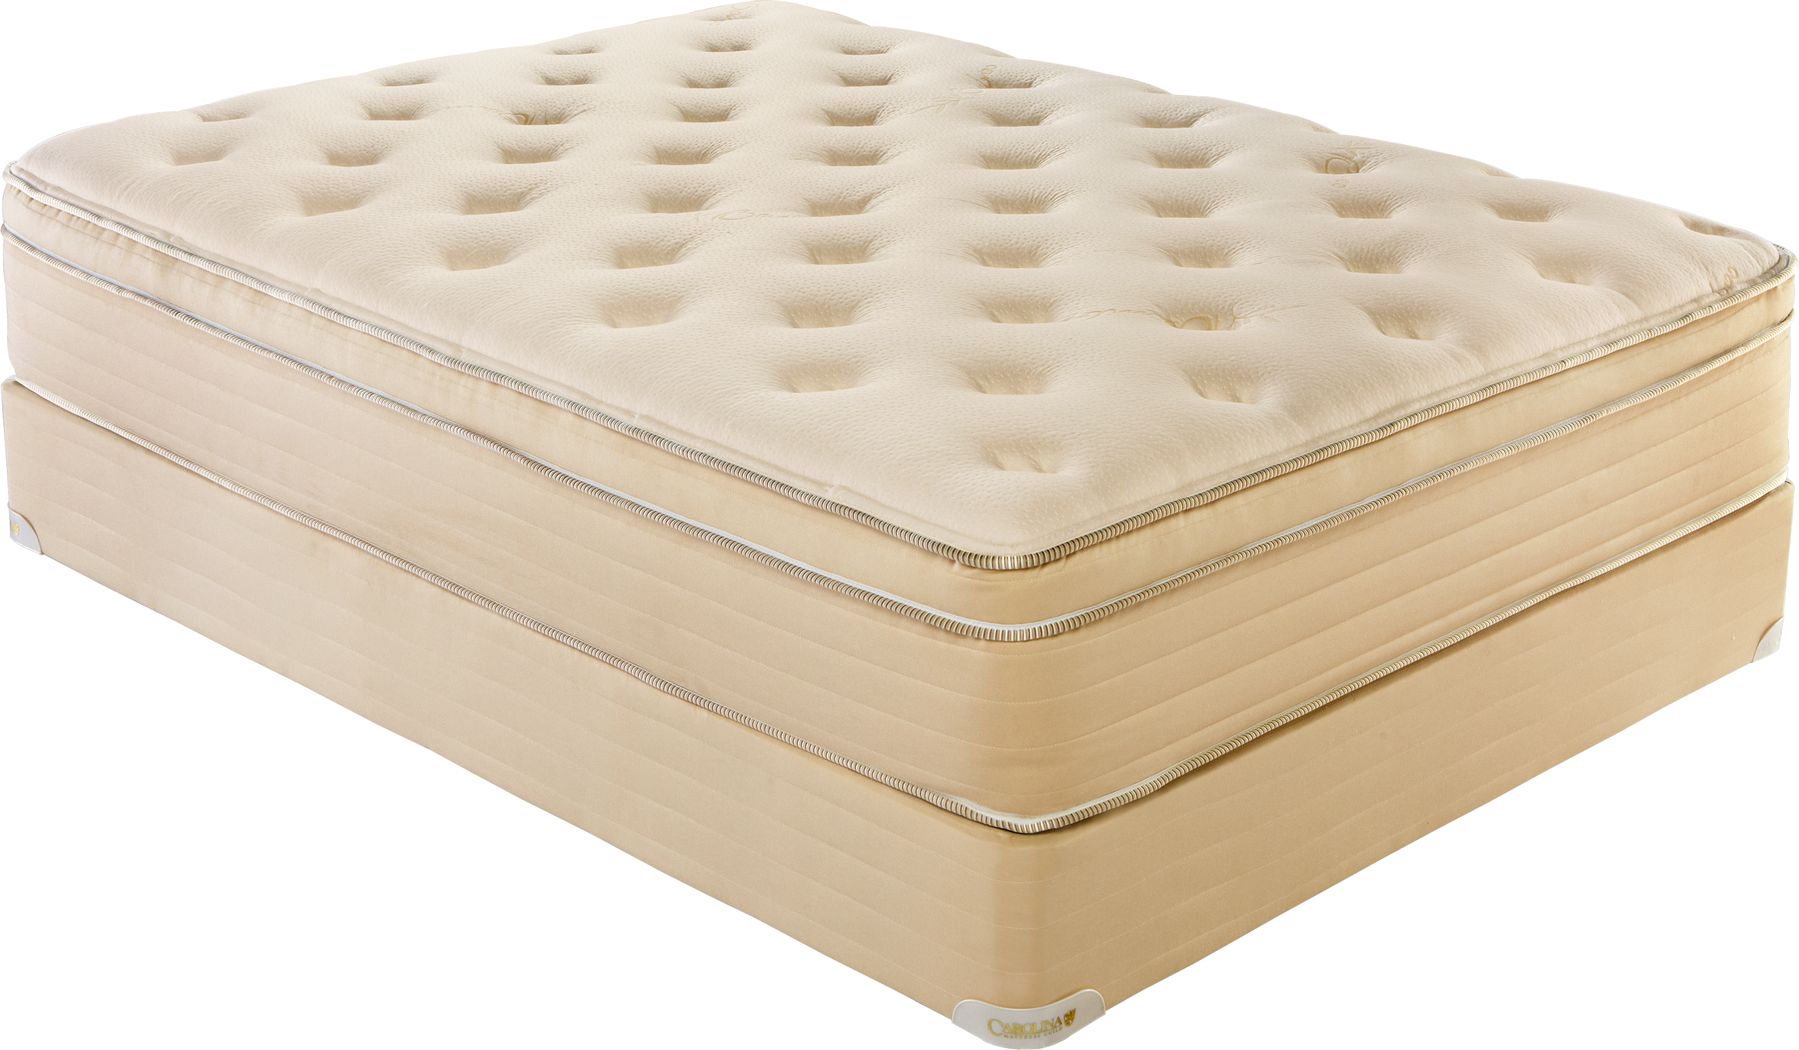 carolina mattress guild radiant air gel reviews